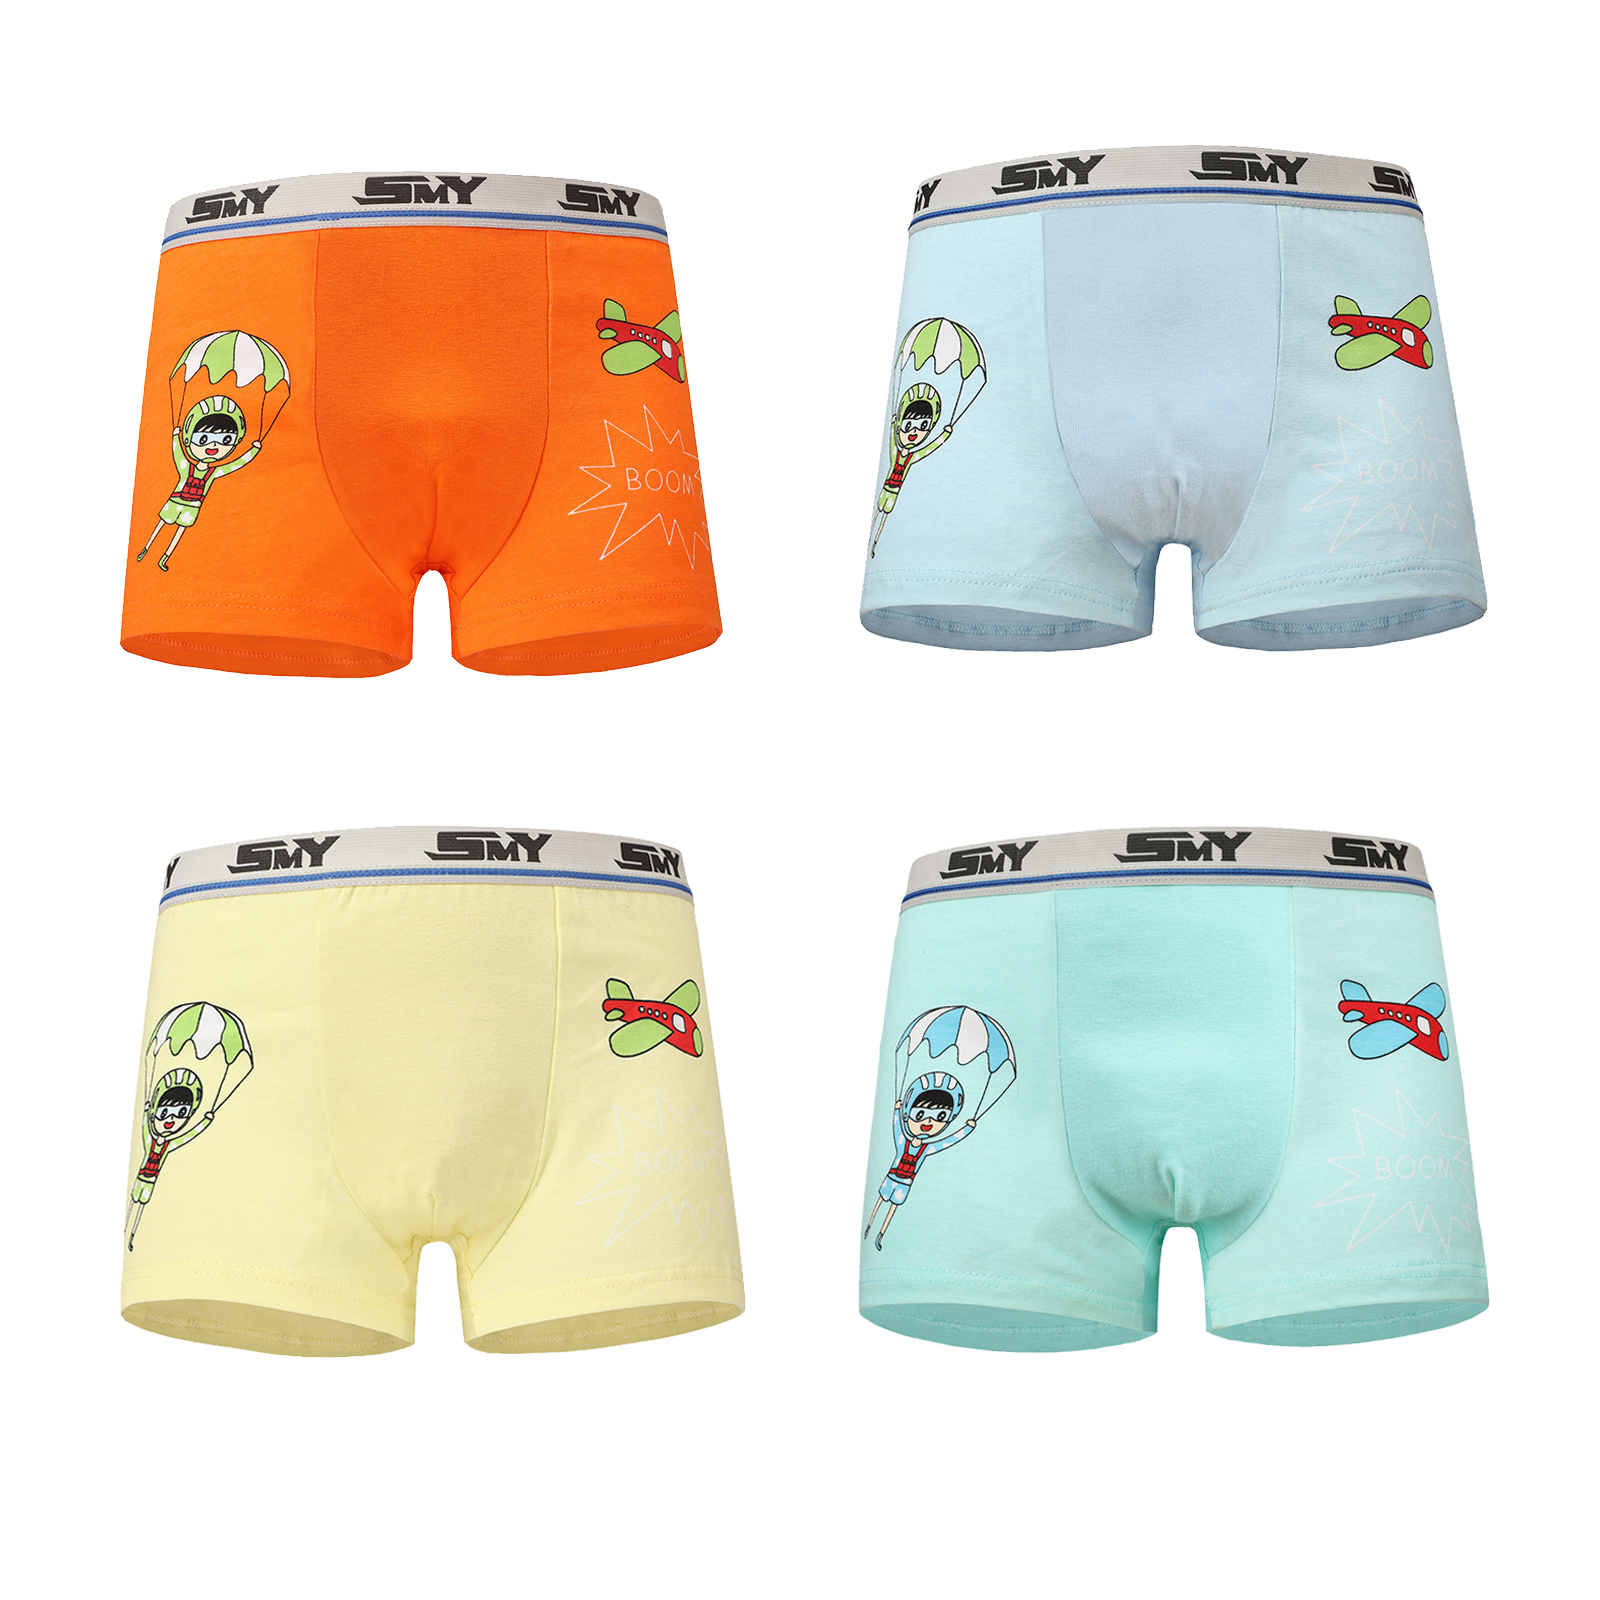 4 Pcs/ boys underwear kids teen panties cartoon Boy Boxers cotton Stripes Teenager Underpants Children's Shorts Panties for Baby